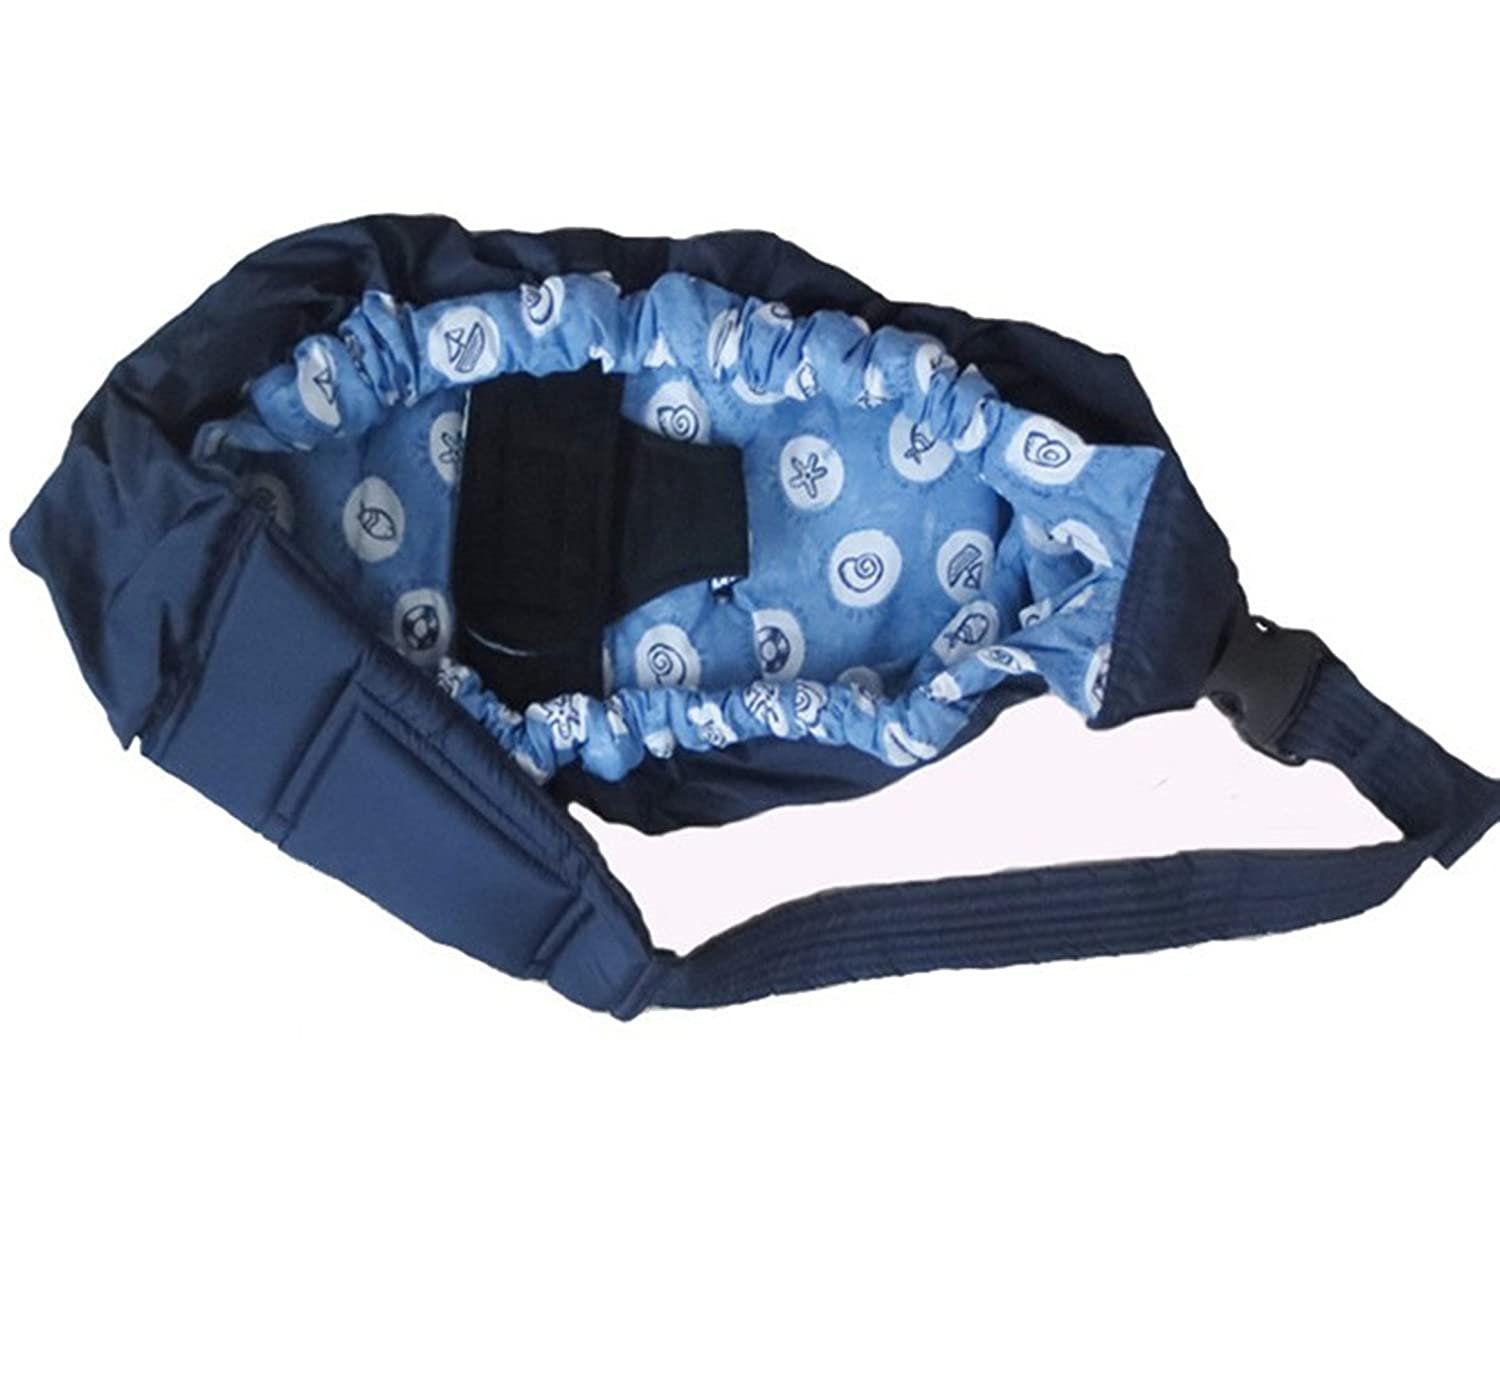 Meishine® Cotton Adjustable newborn baby carrier baby sling baby wrap carrier baby sling baby carrier front Carrier light blue